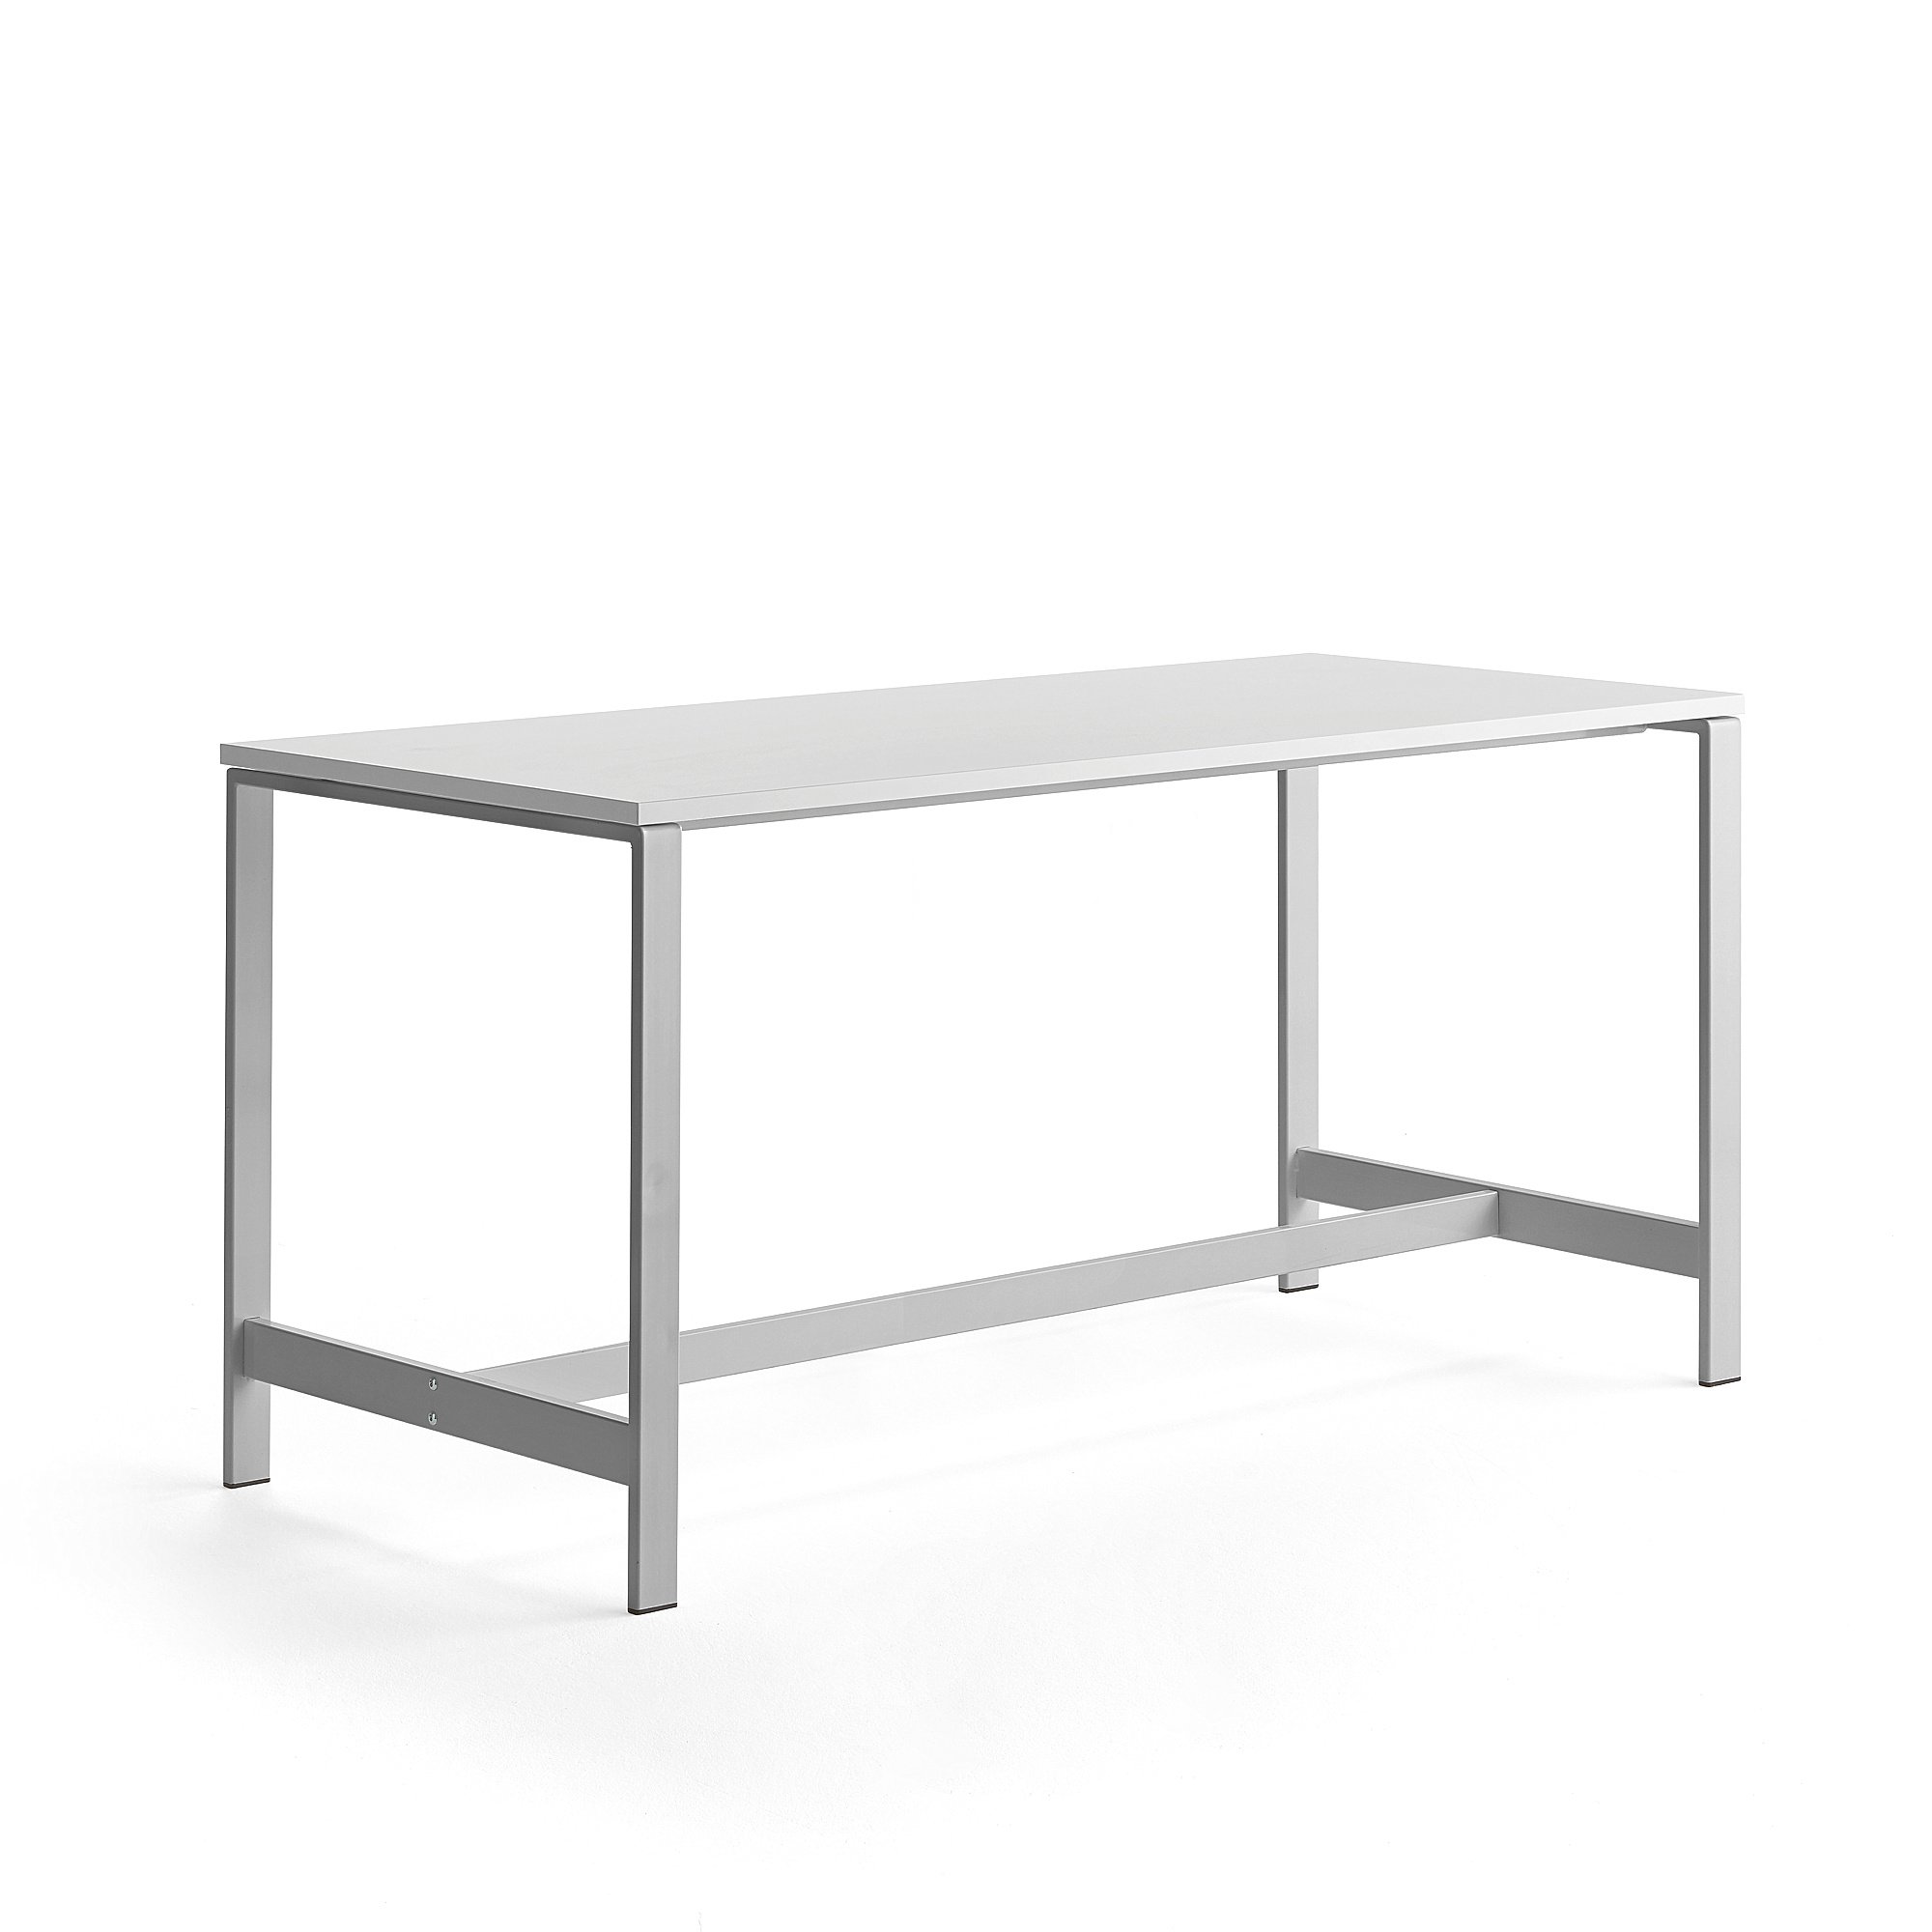 Stôl VARIOUS, 1800x800x900 mm, strieborná, biela